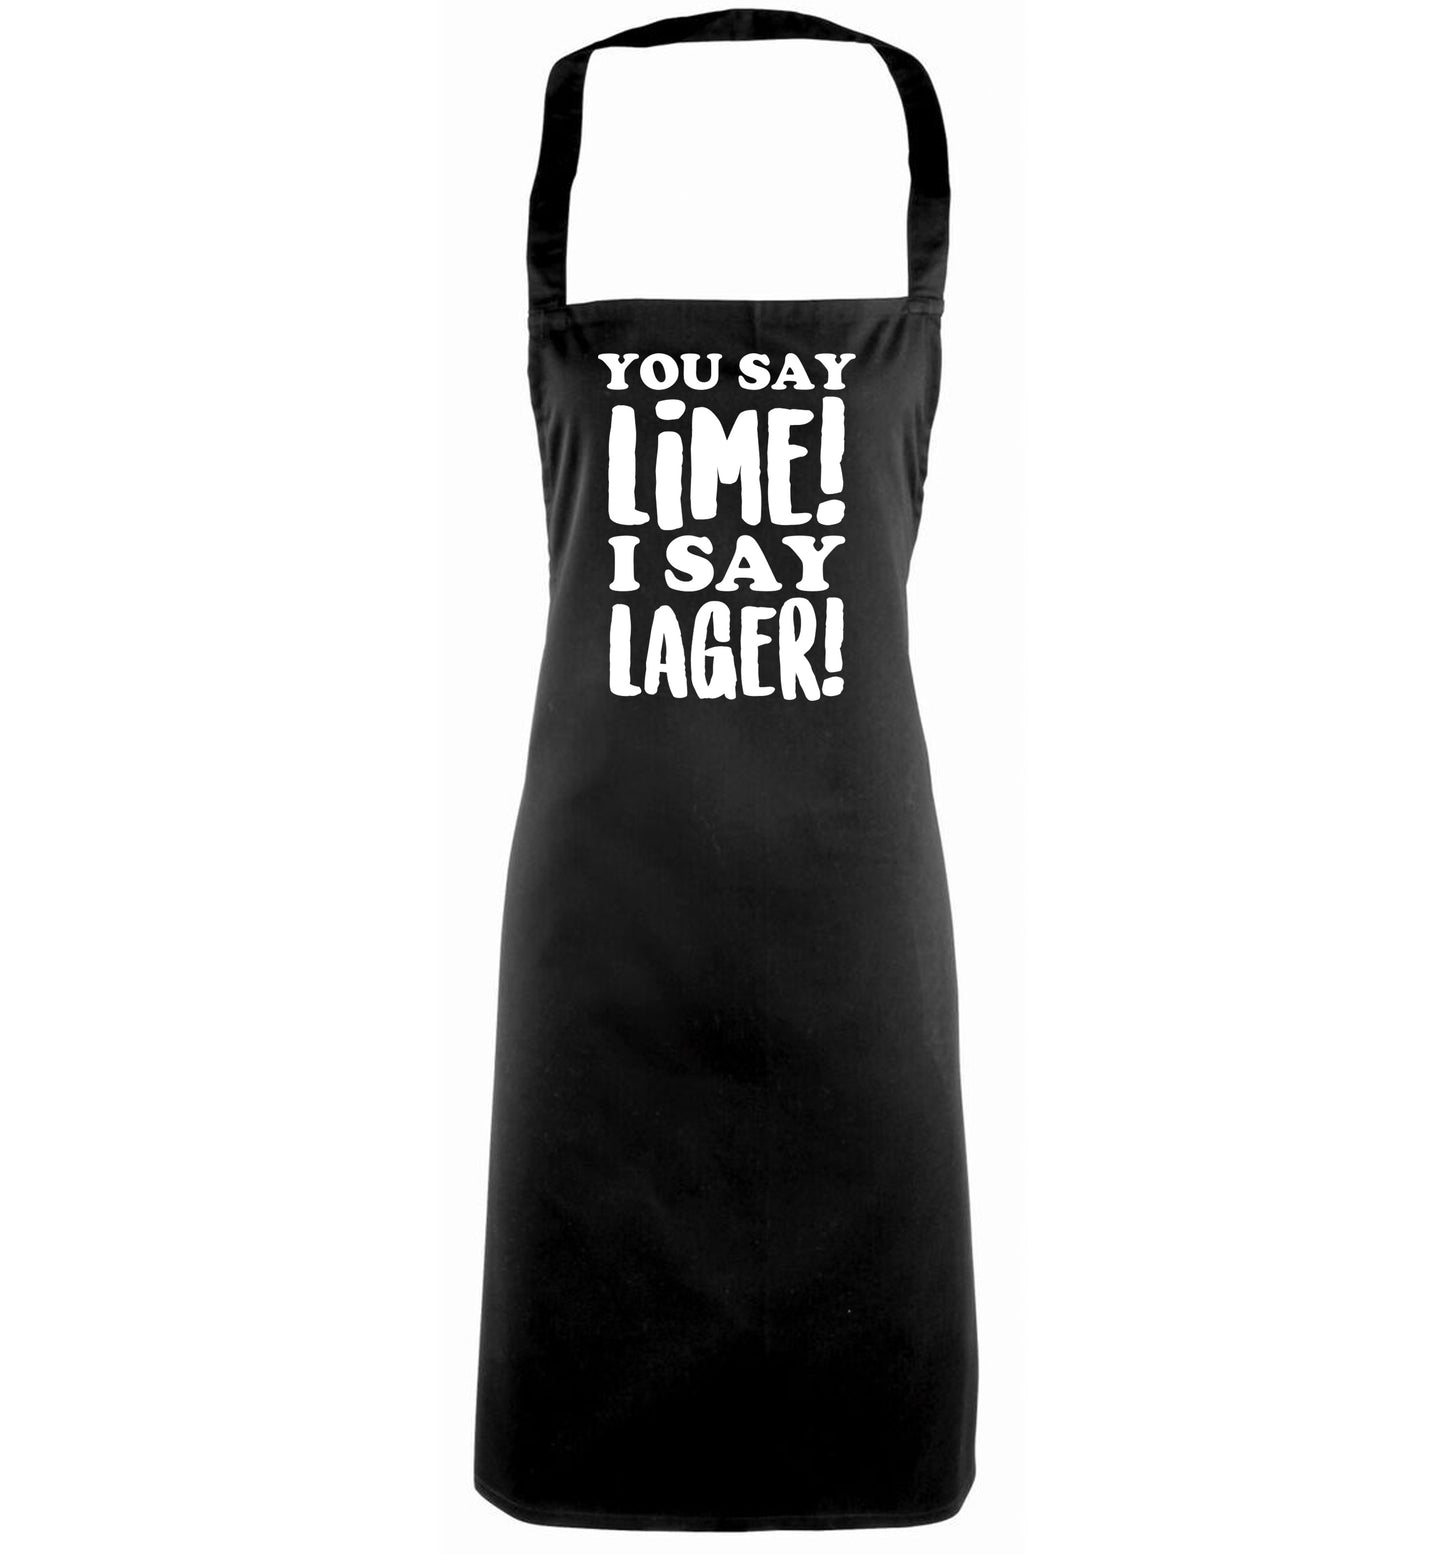 You say lime I say lager! black apron